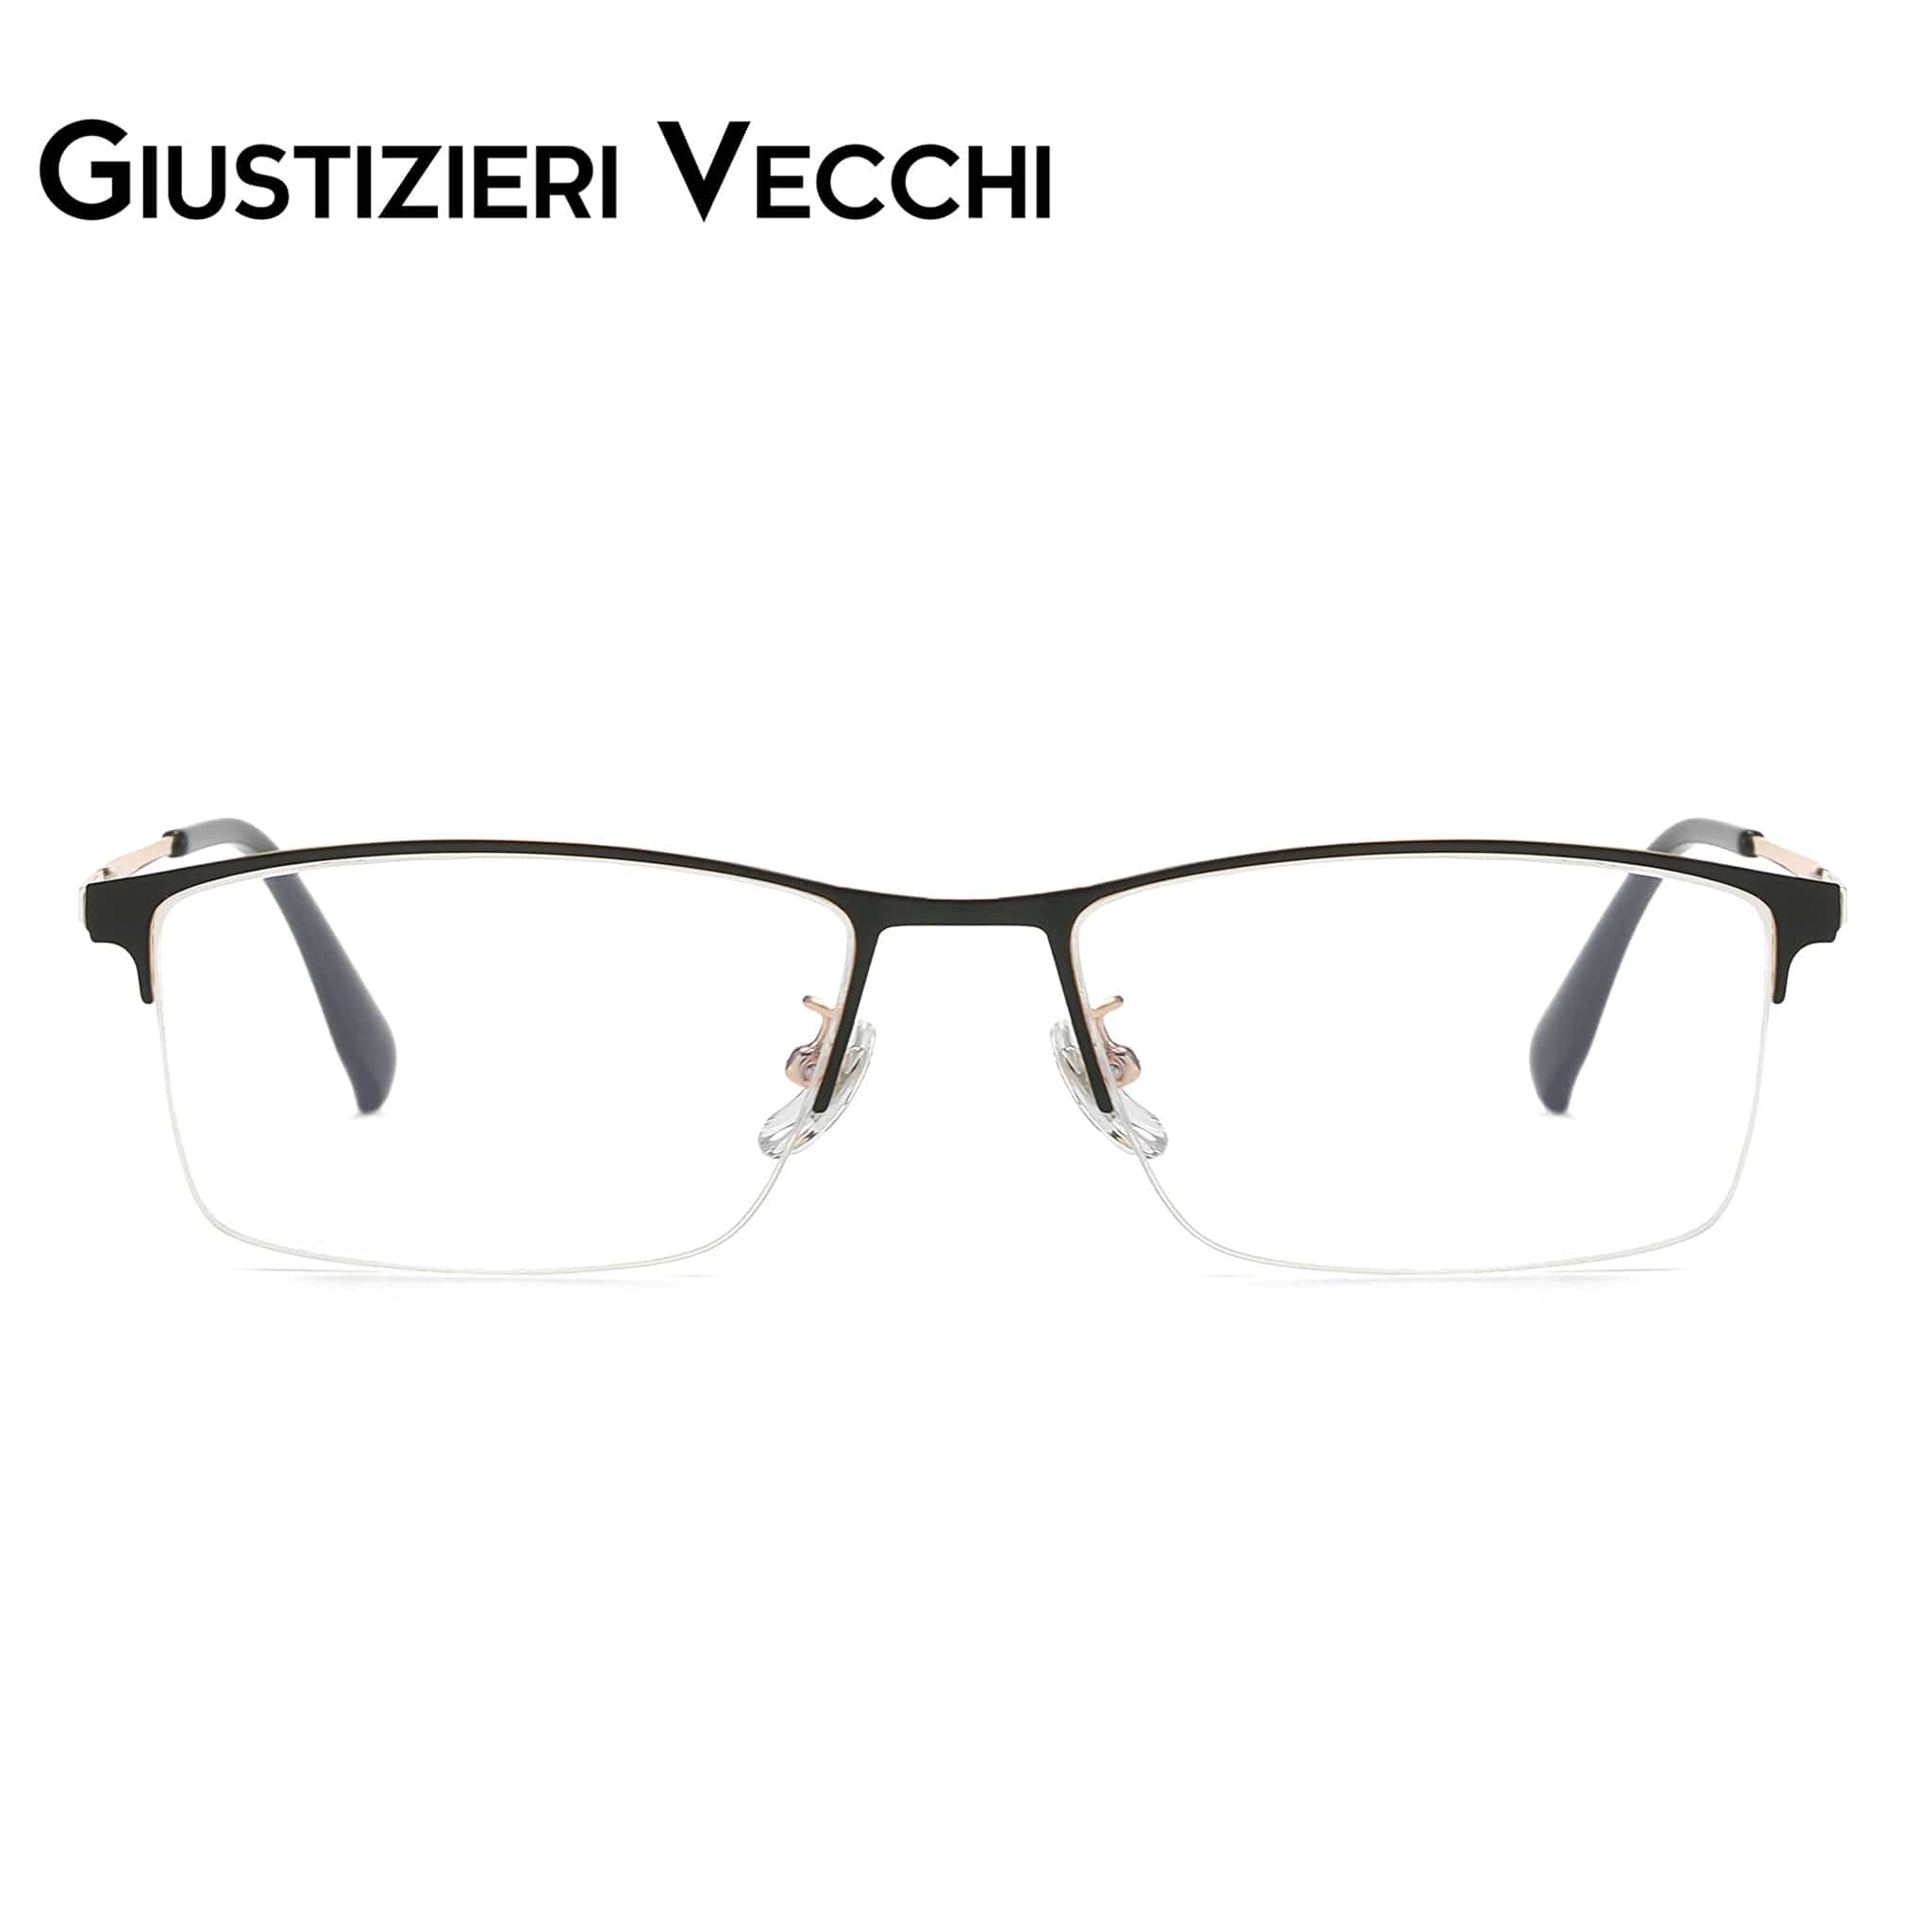 GIUSTIZIERI VECCHI Eyeglasses Medium / Black with Rose Gold Thunderbolt Duo